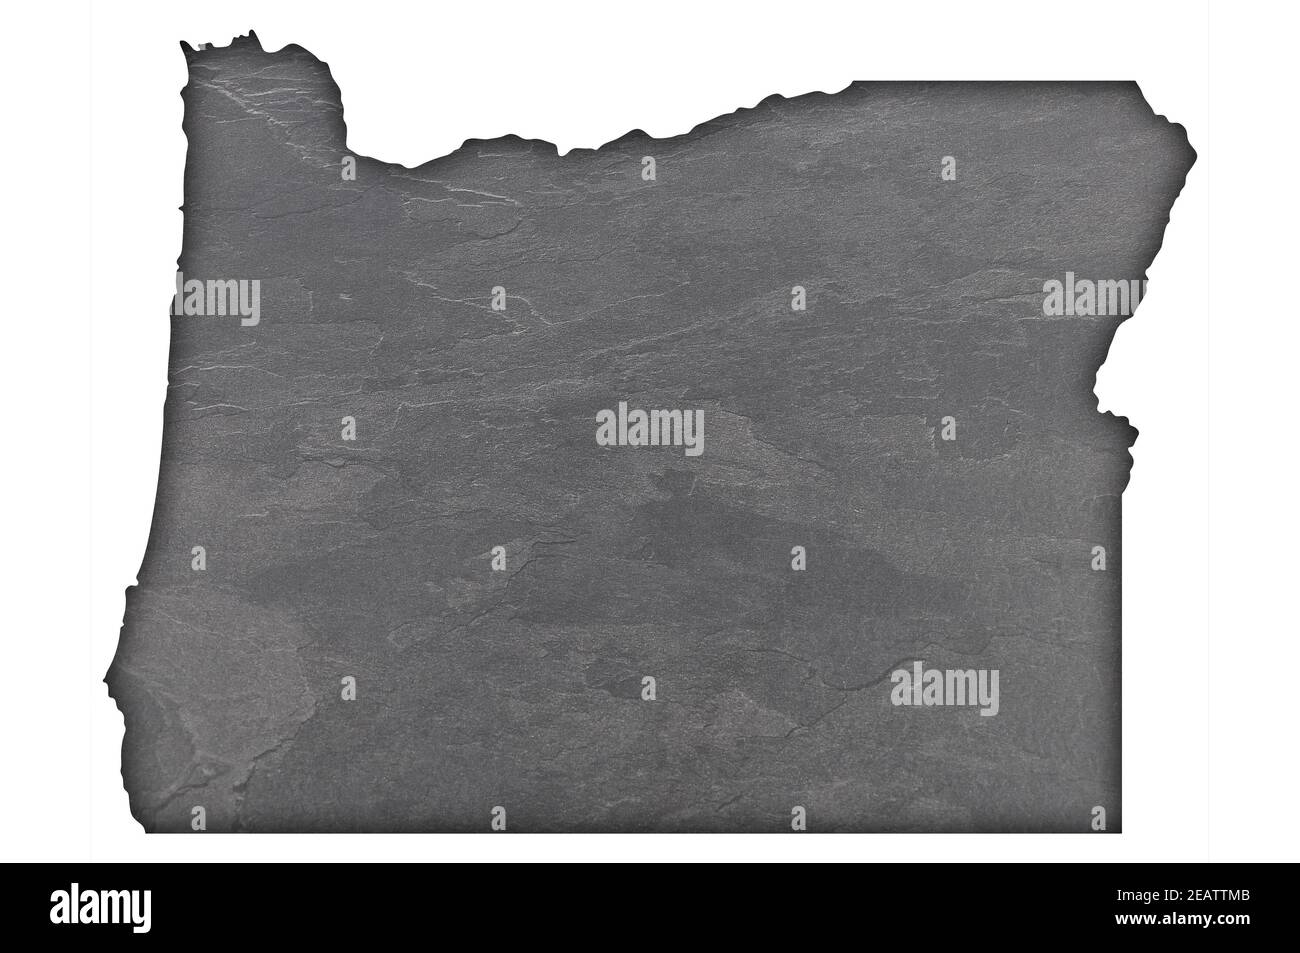 Oregon scientific Cut Out Stock Images & Pictures - Alamy